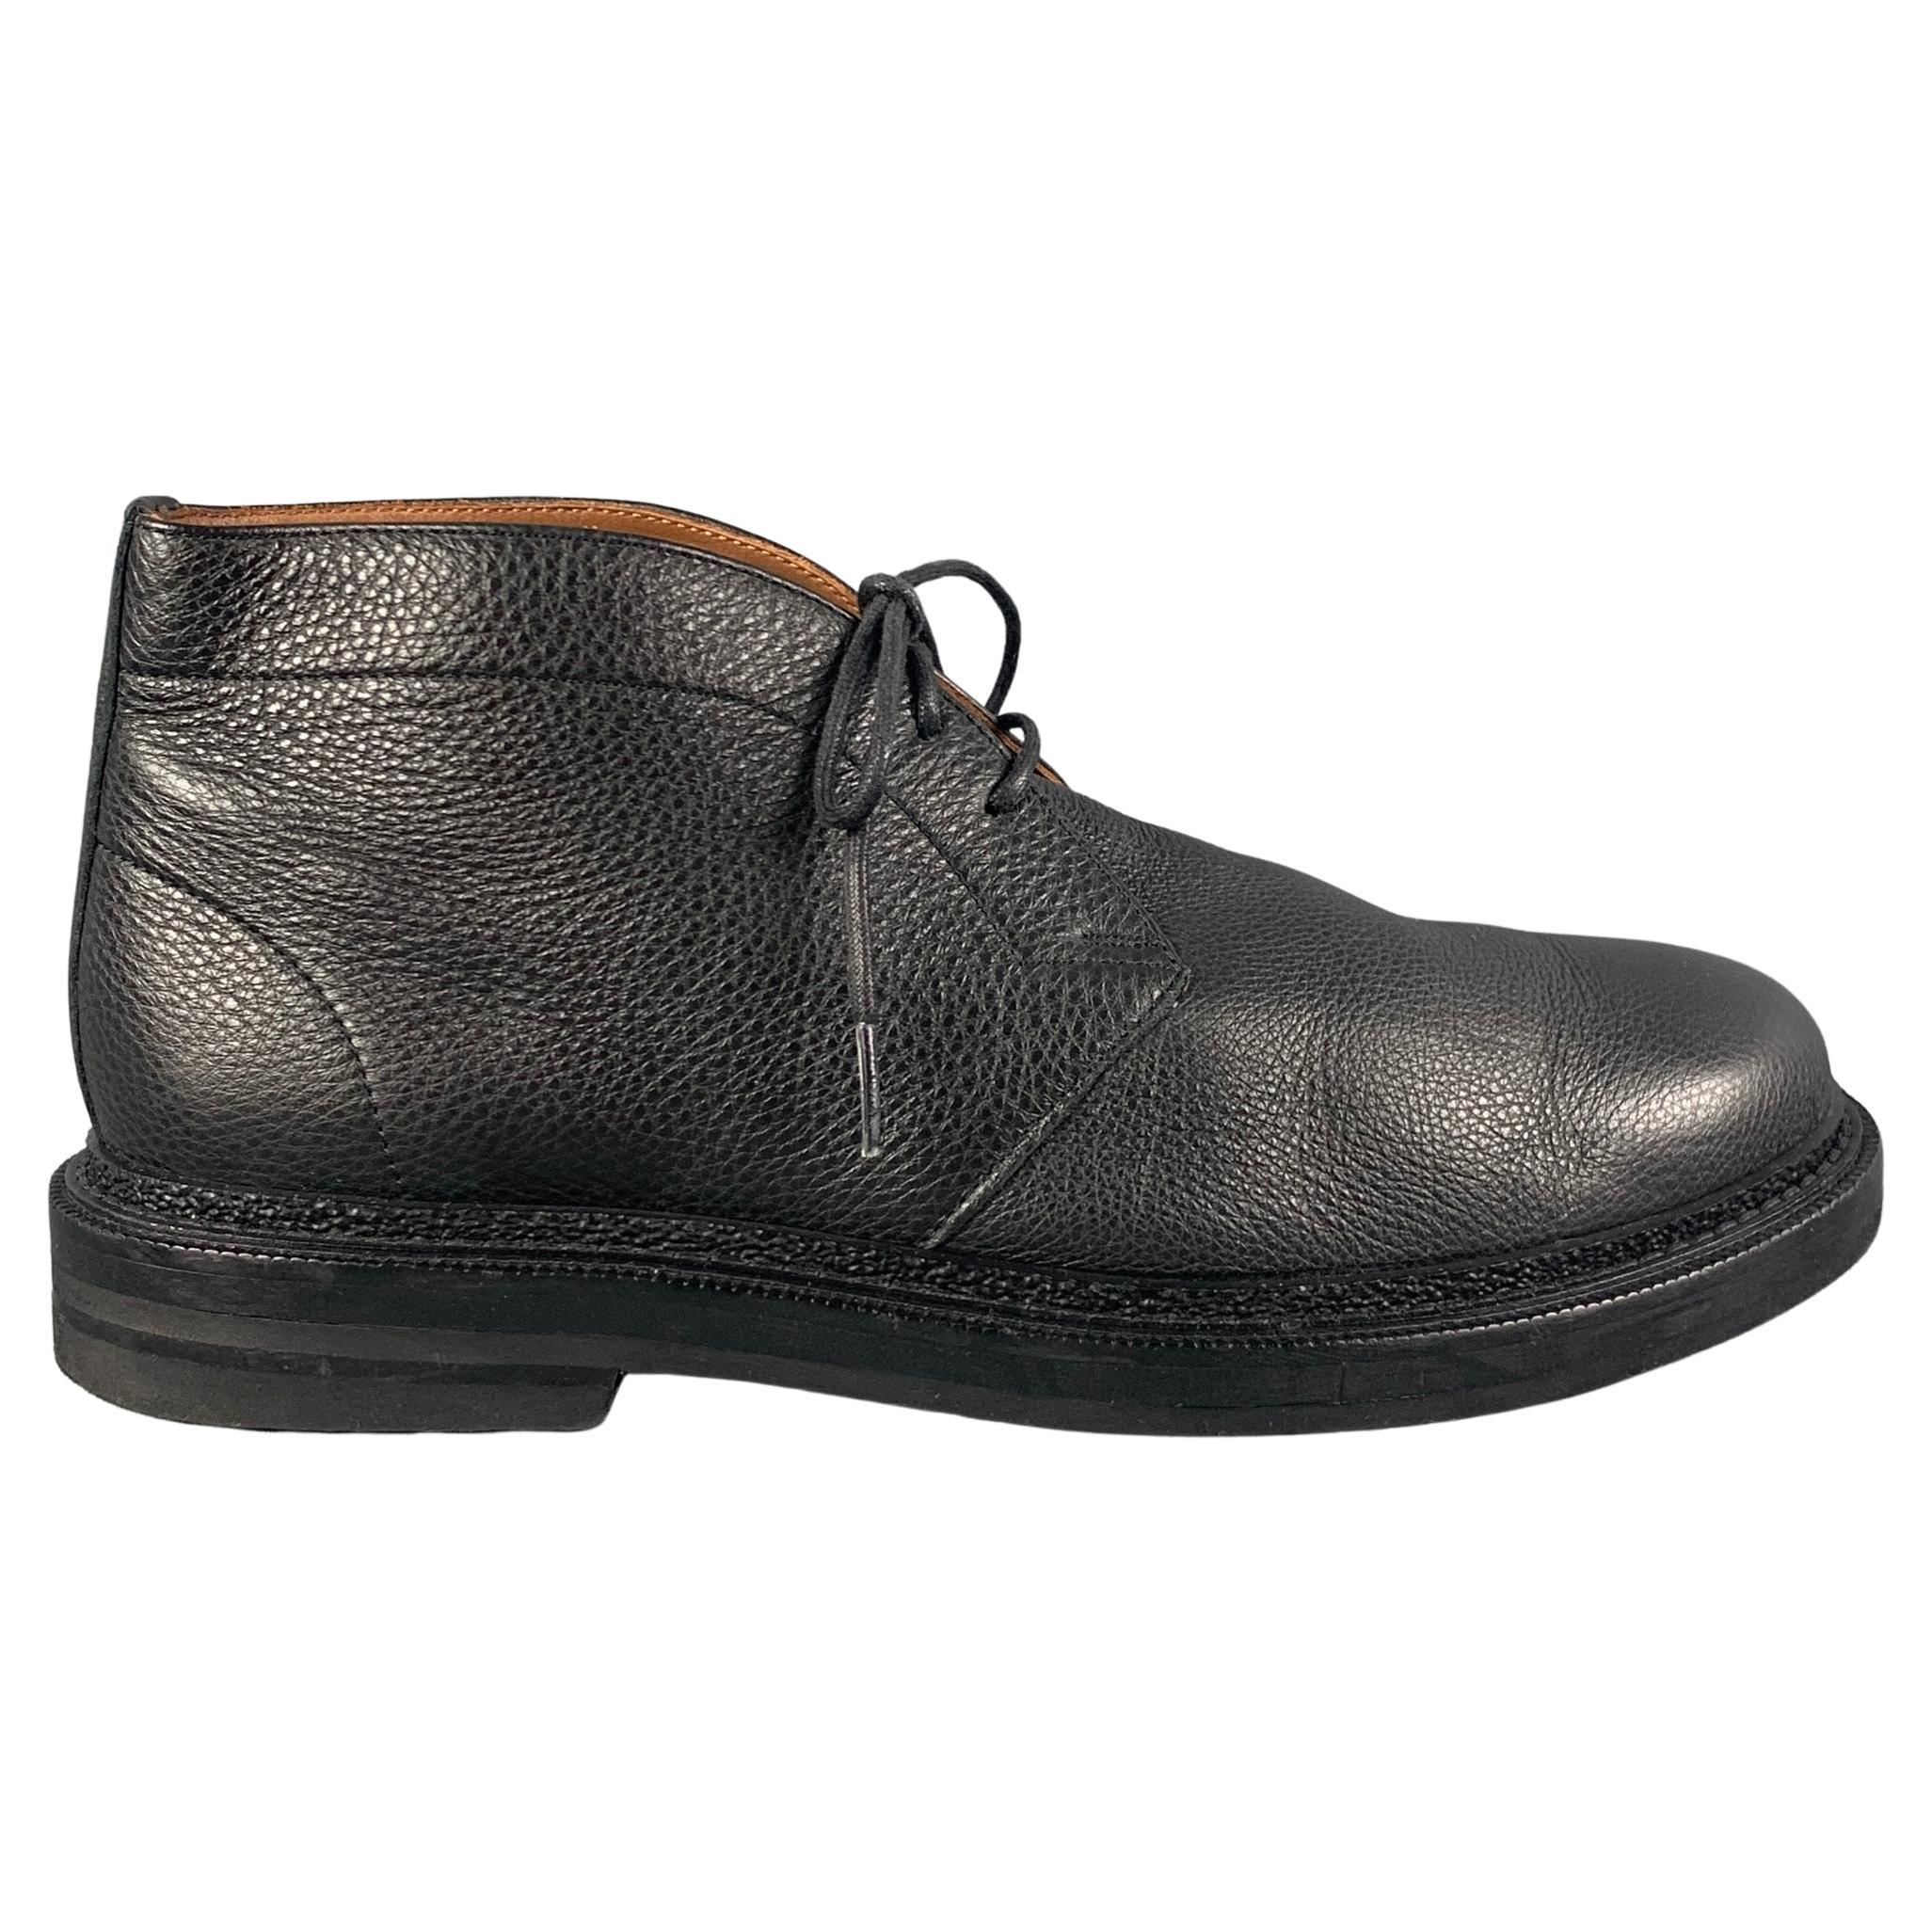 AQUATALIA Size 10.5 Black Leather Lace Up Boots